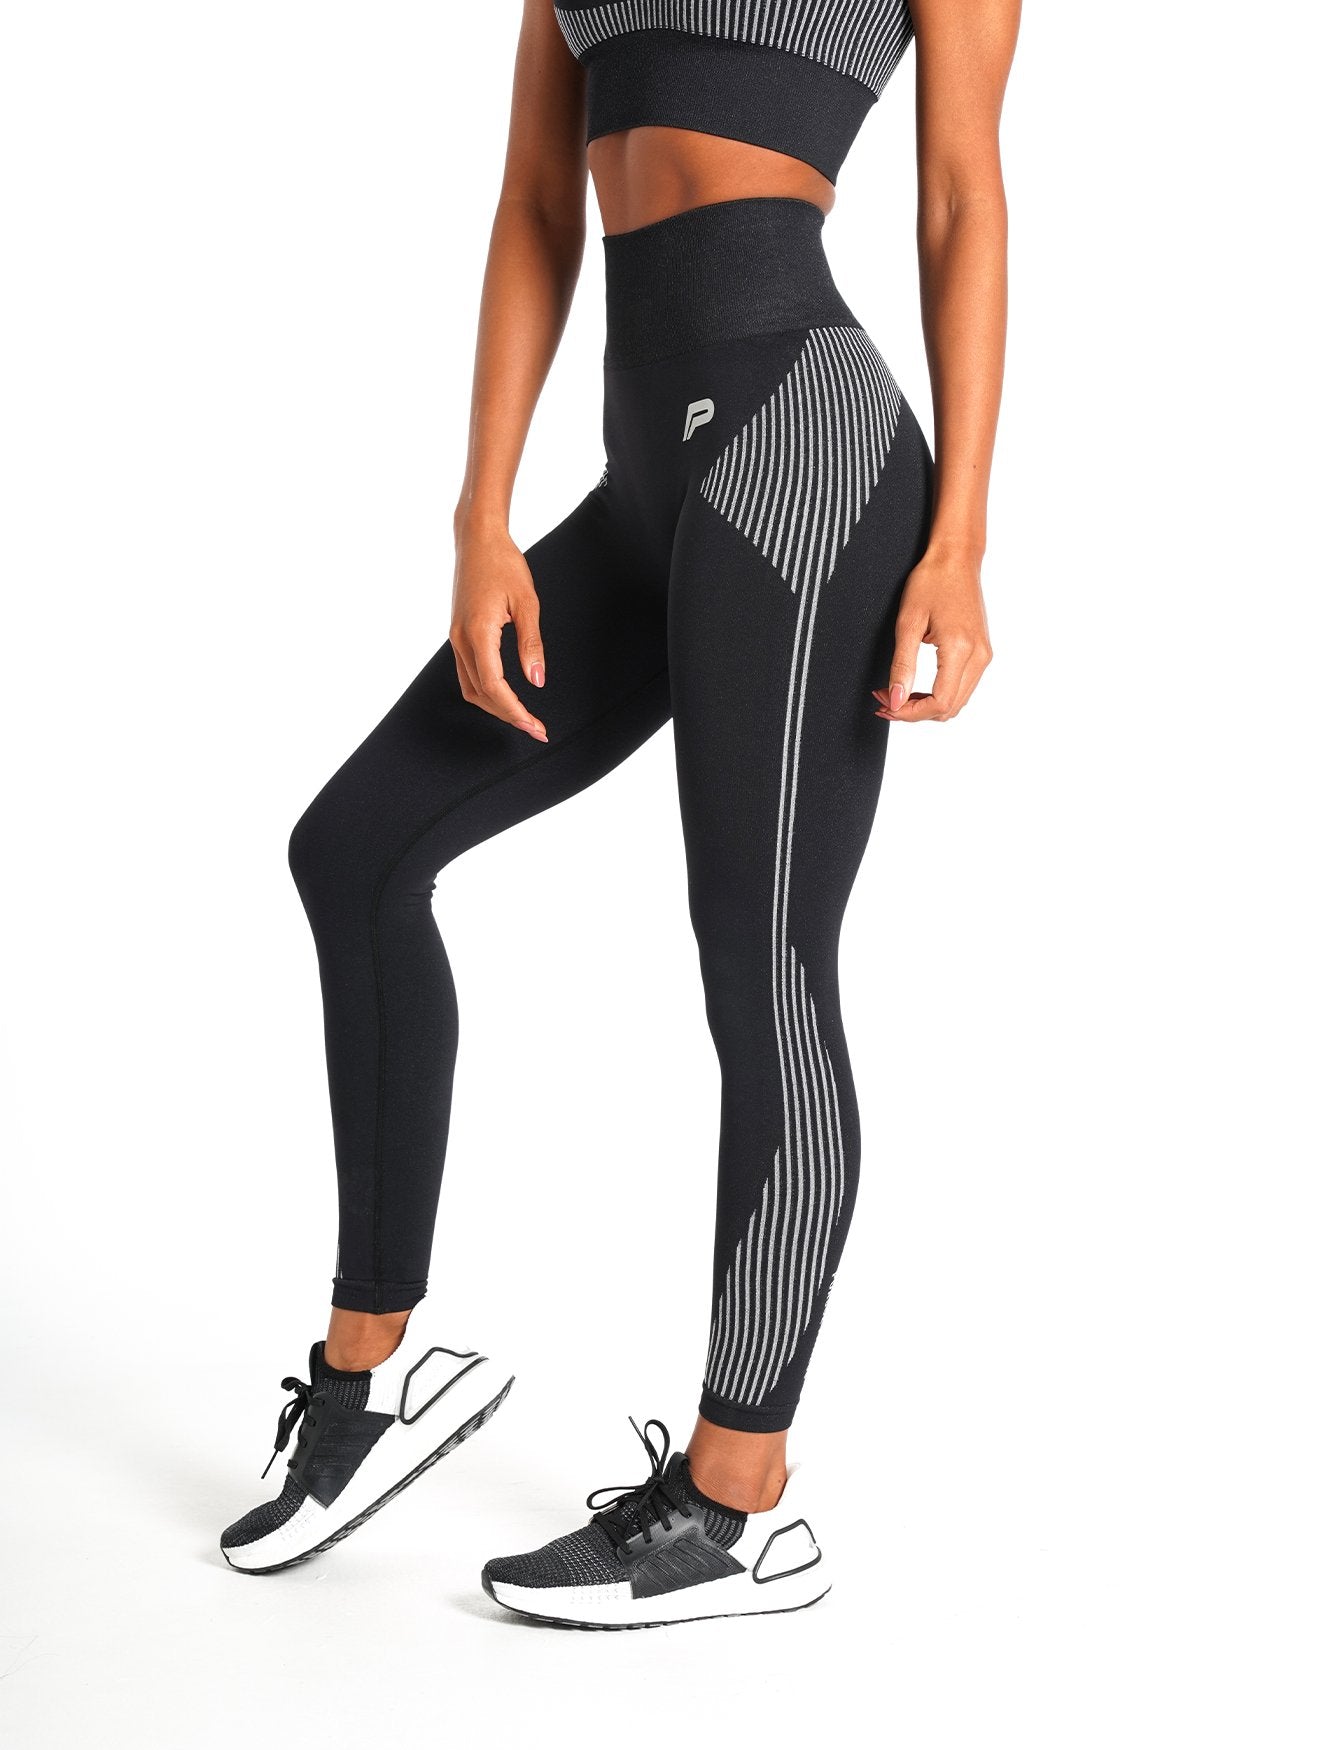 ADAPT Seamless Leggings / Black Pursue Fitness 2